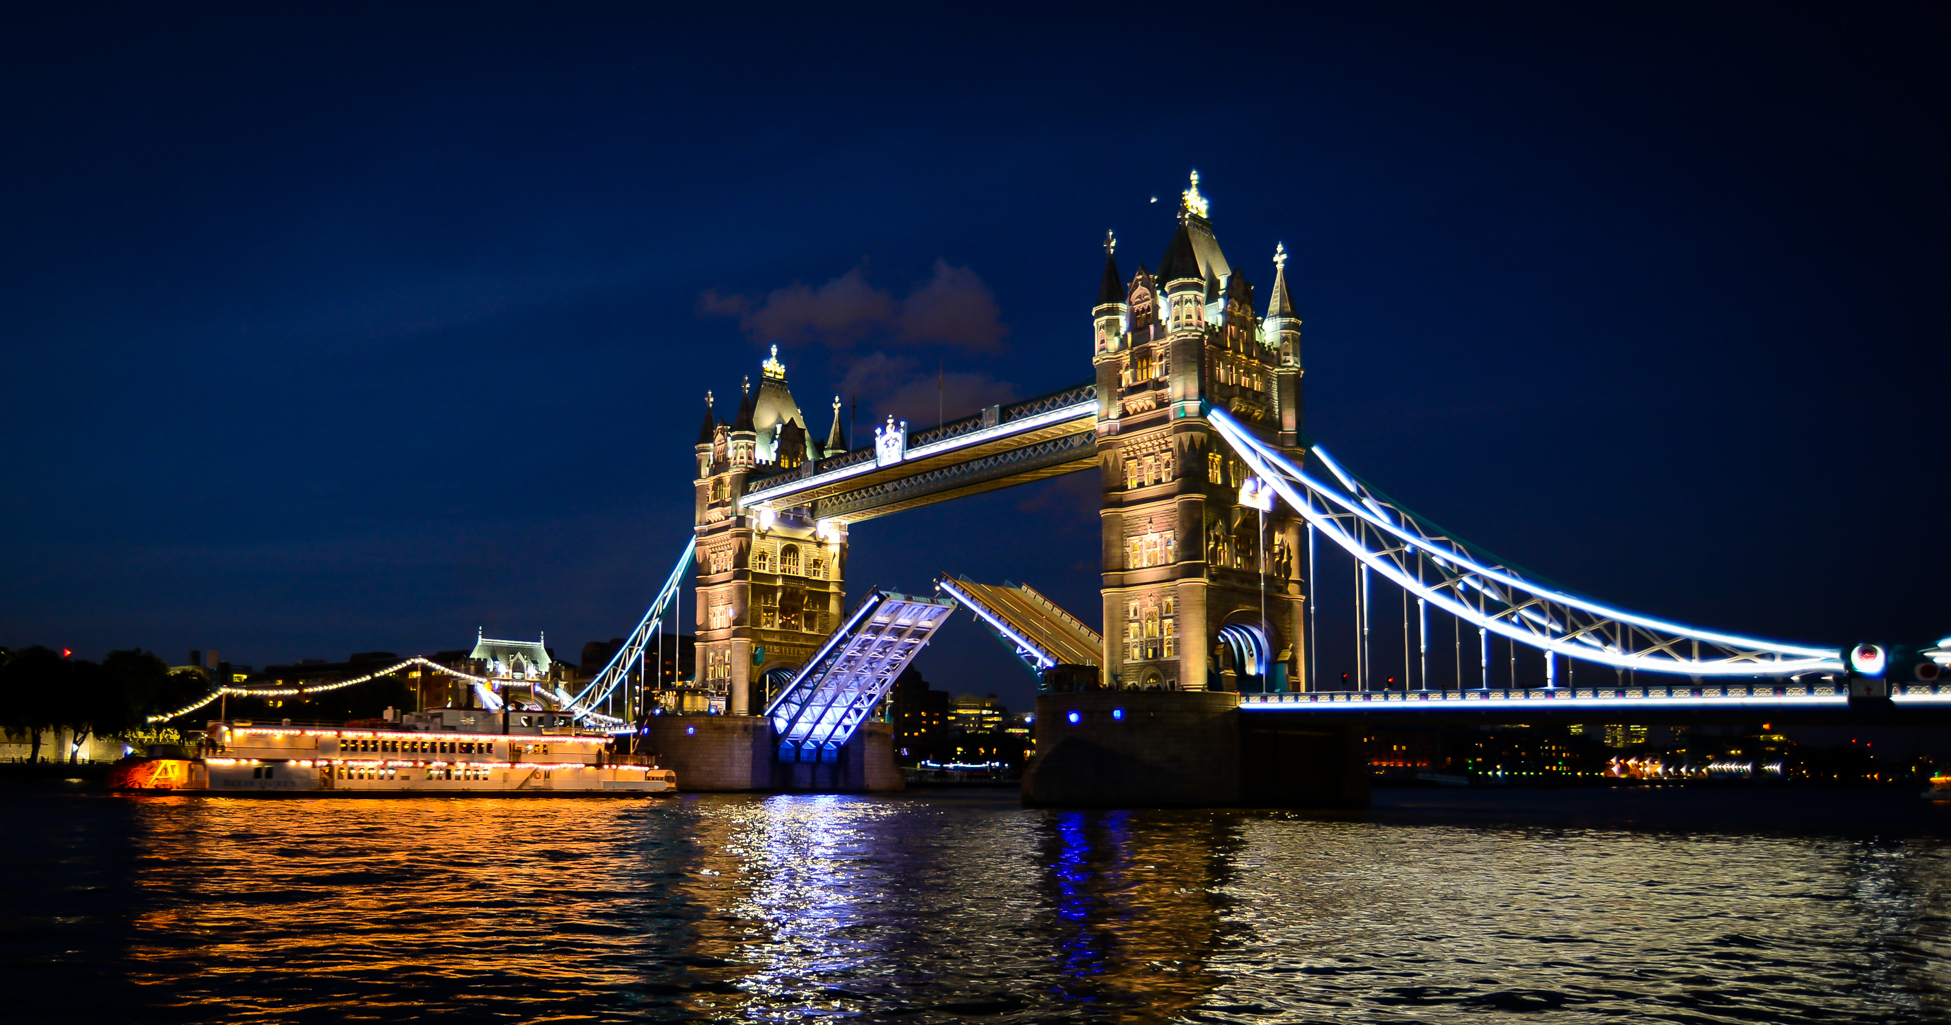 Tower Bridge, Bascule Bridge in London - Travelling Moods